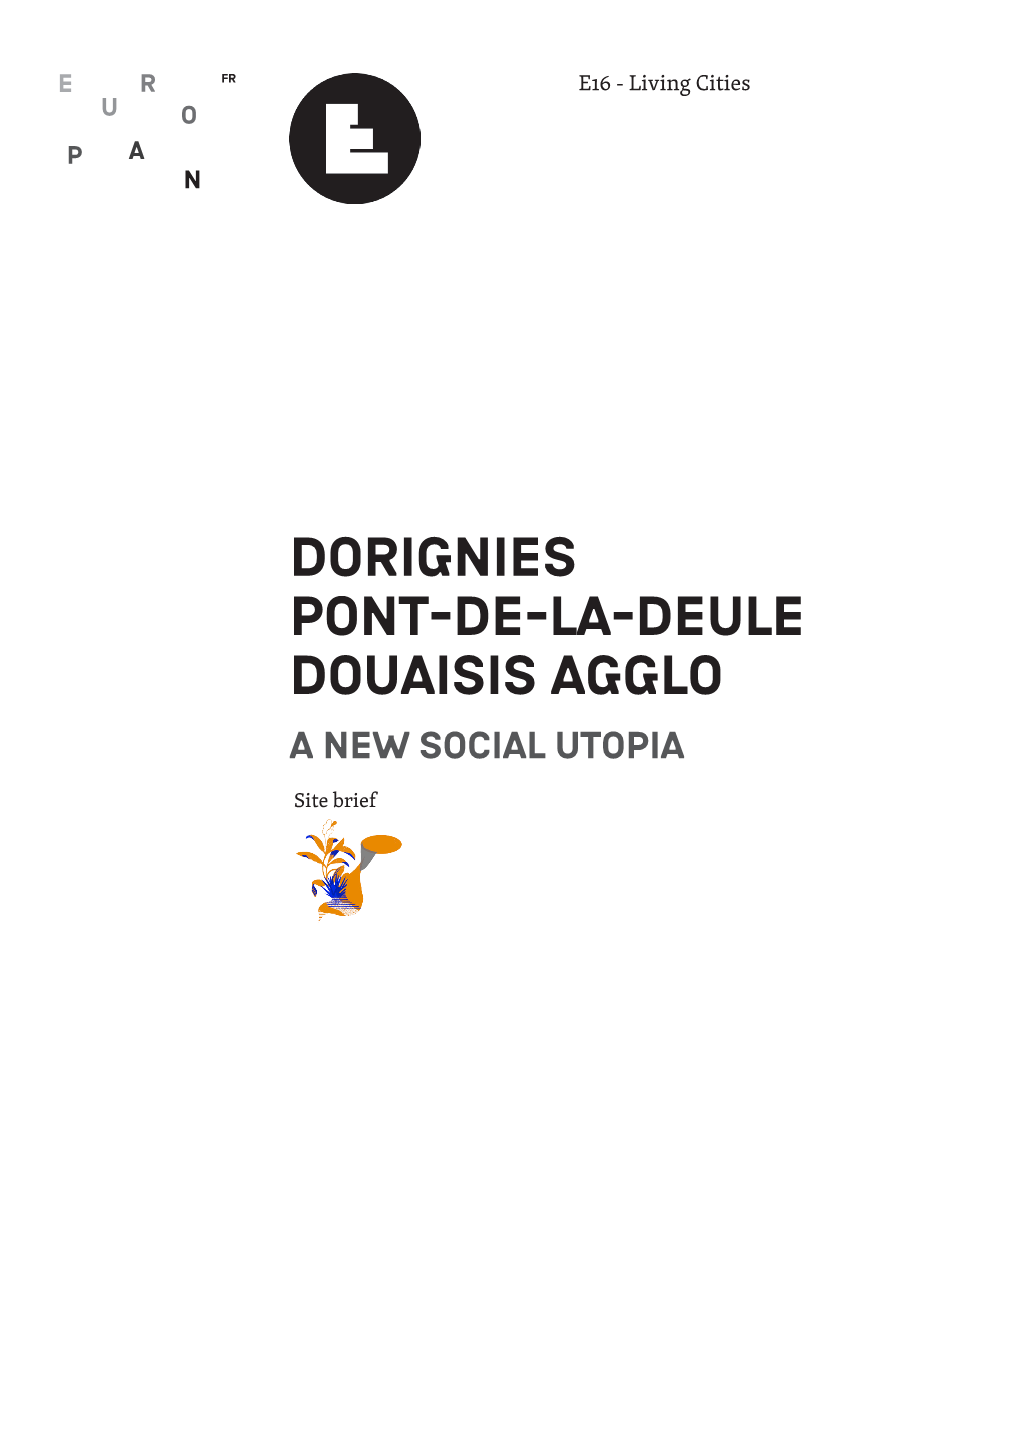 Dorignies Pont-De-La-Deule Douaisis Agglo a New Social Utopia